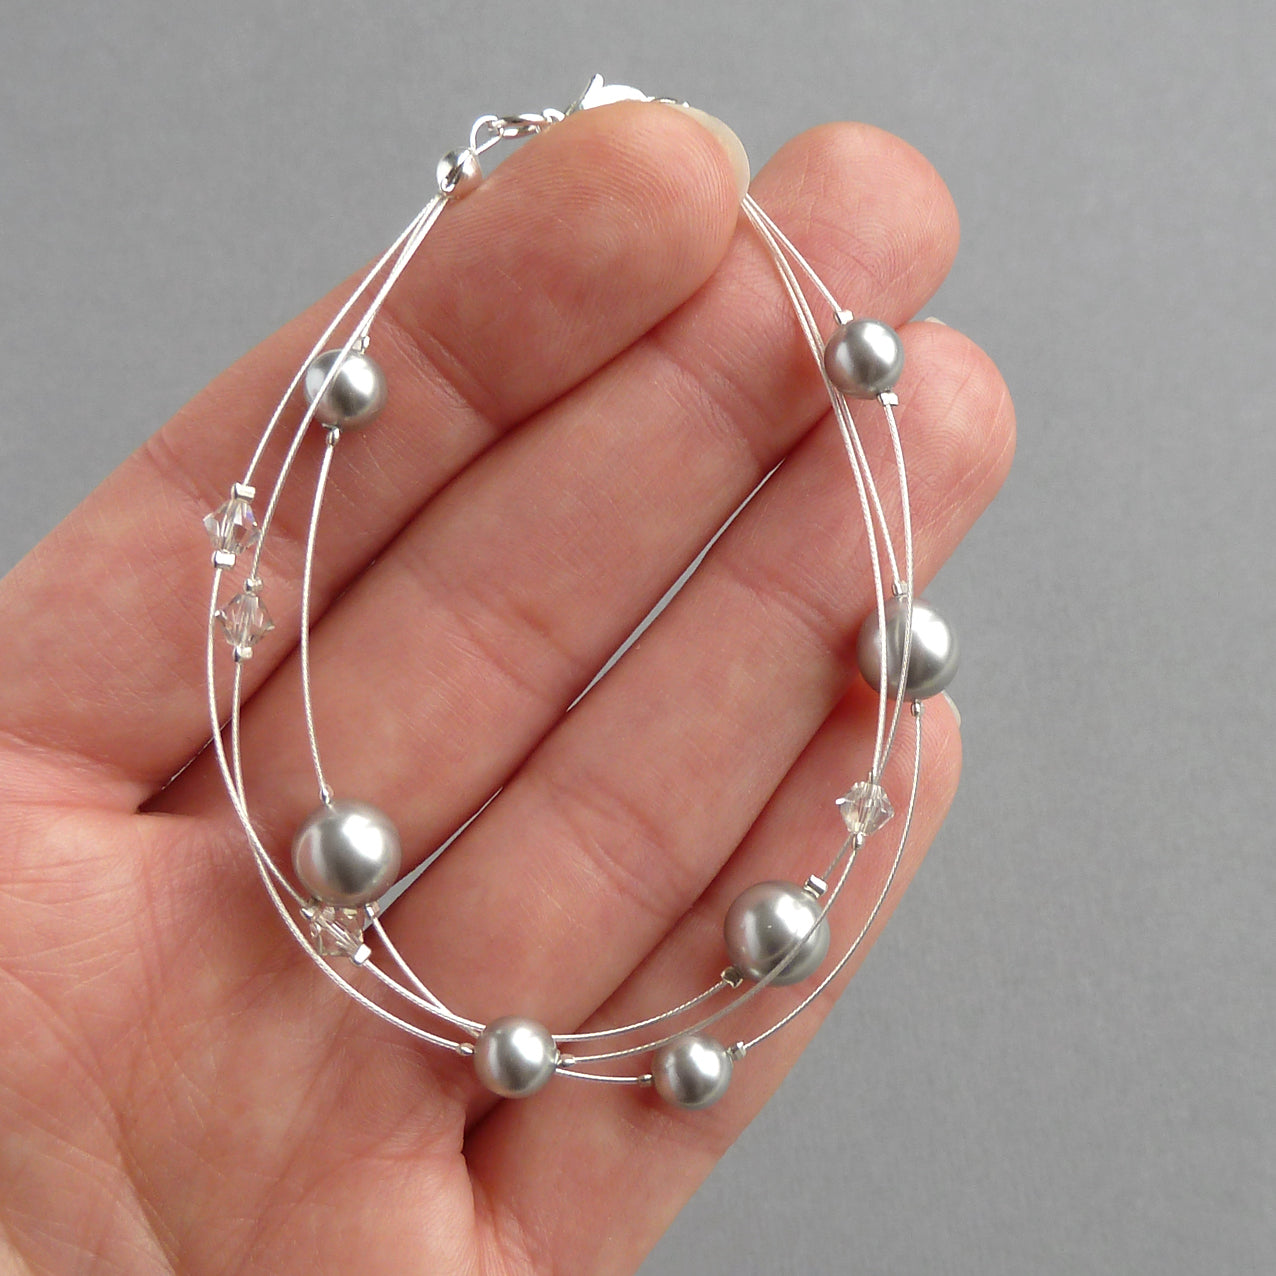 Light grey pearl bridesmaids bracelets